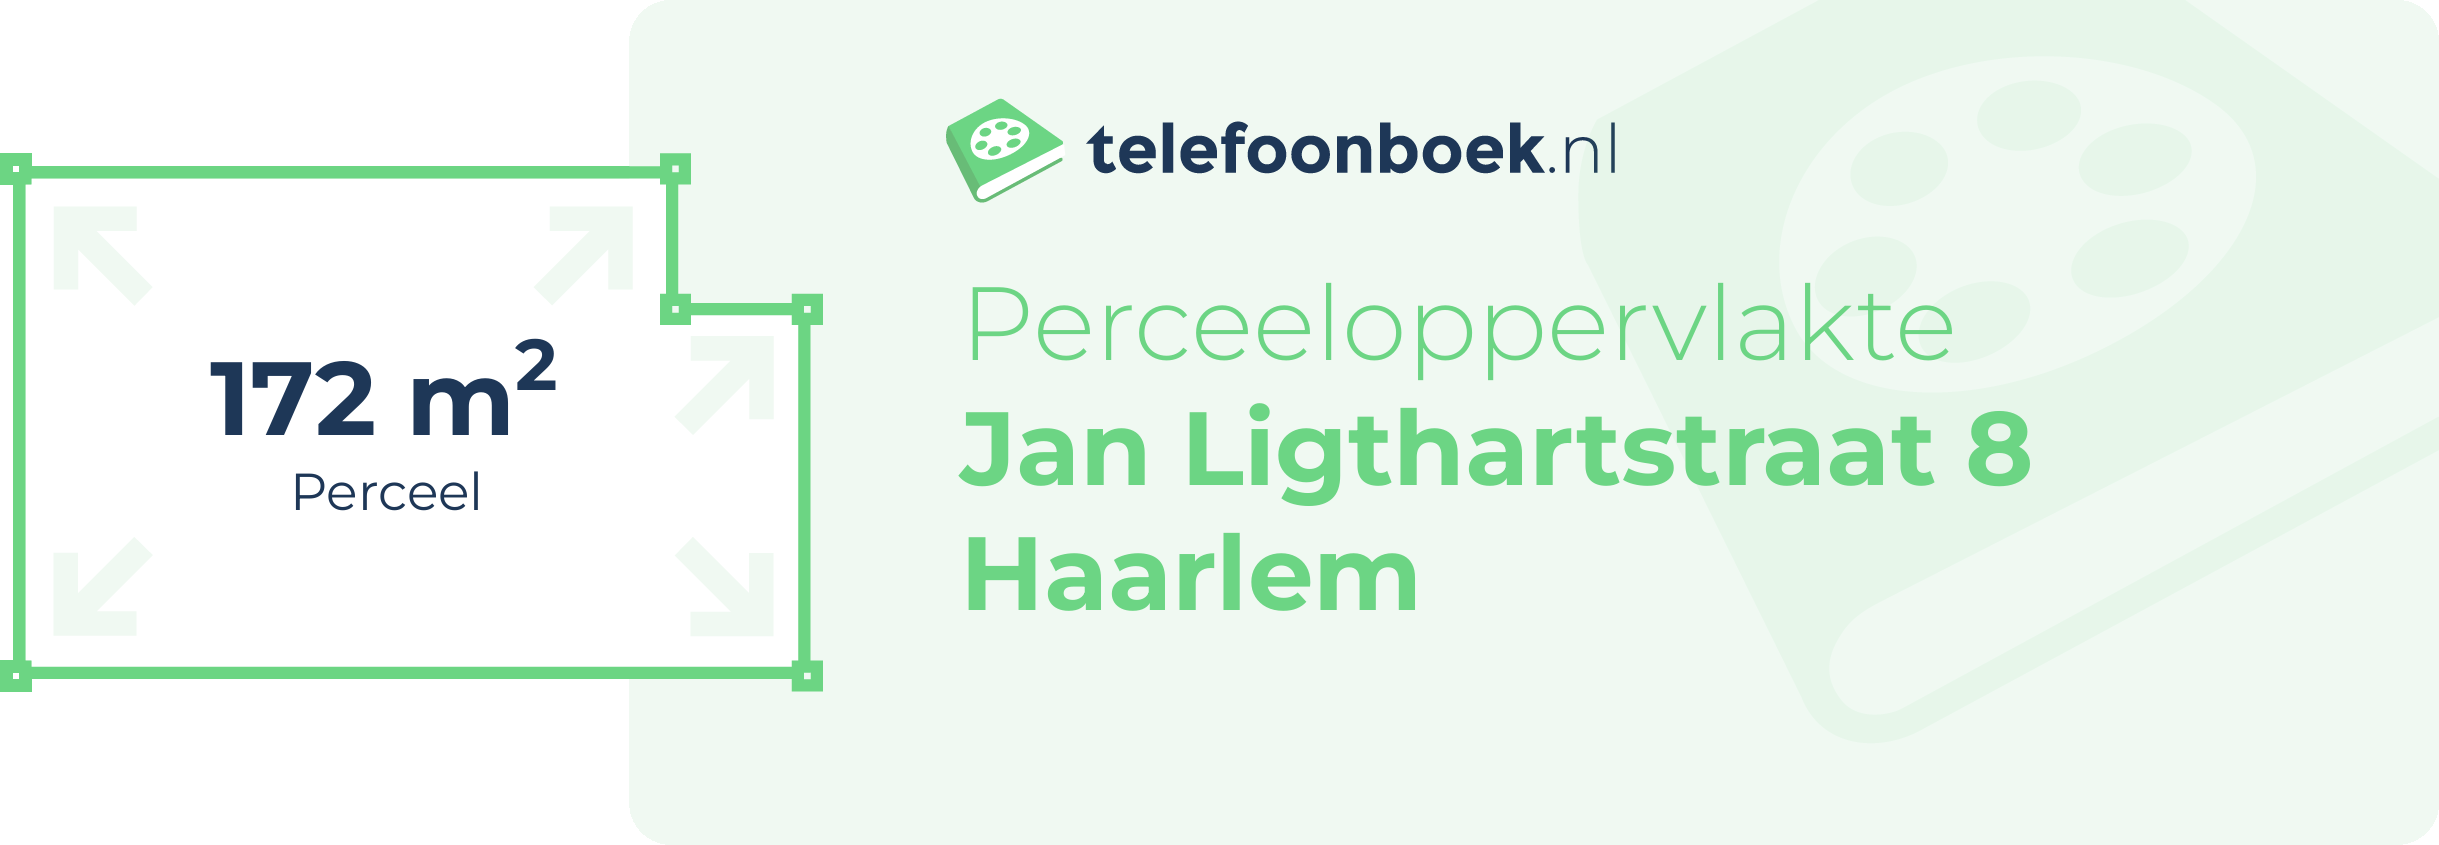 Perceeloppervlakte Jan Ligthartstraat 8 Haarlem